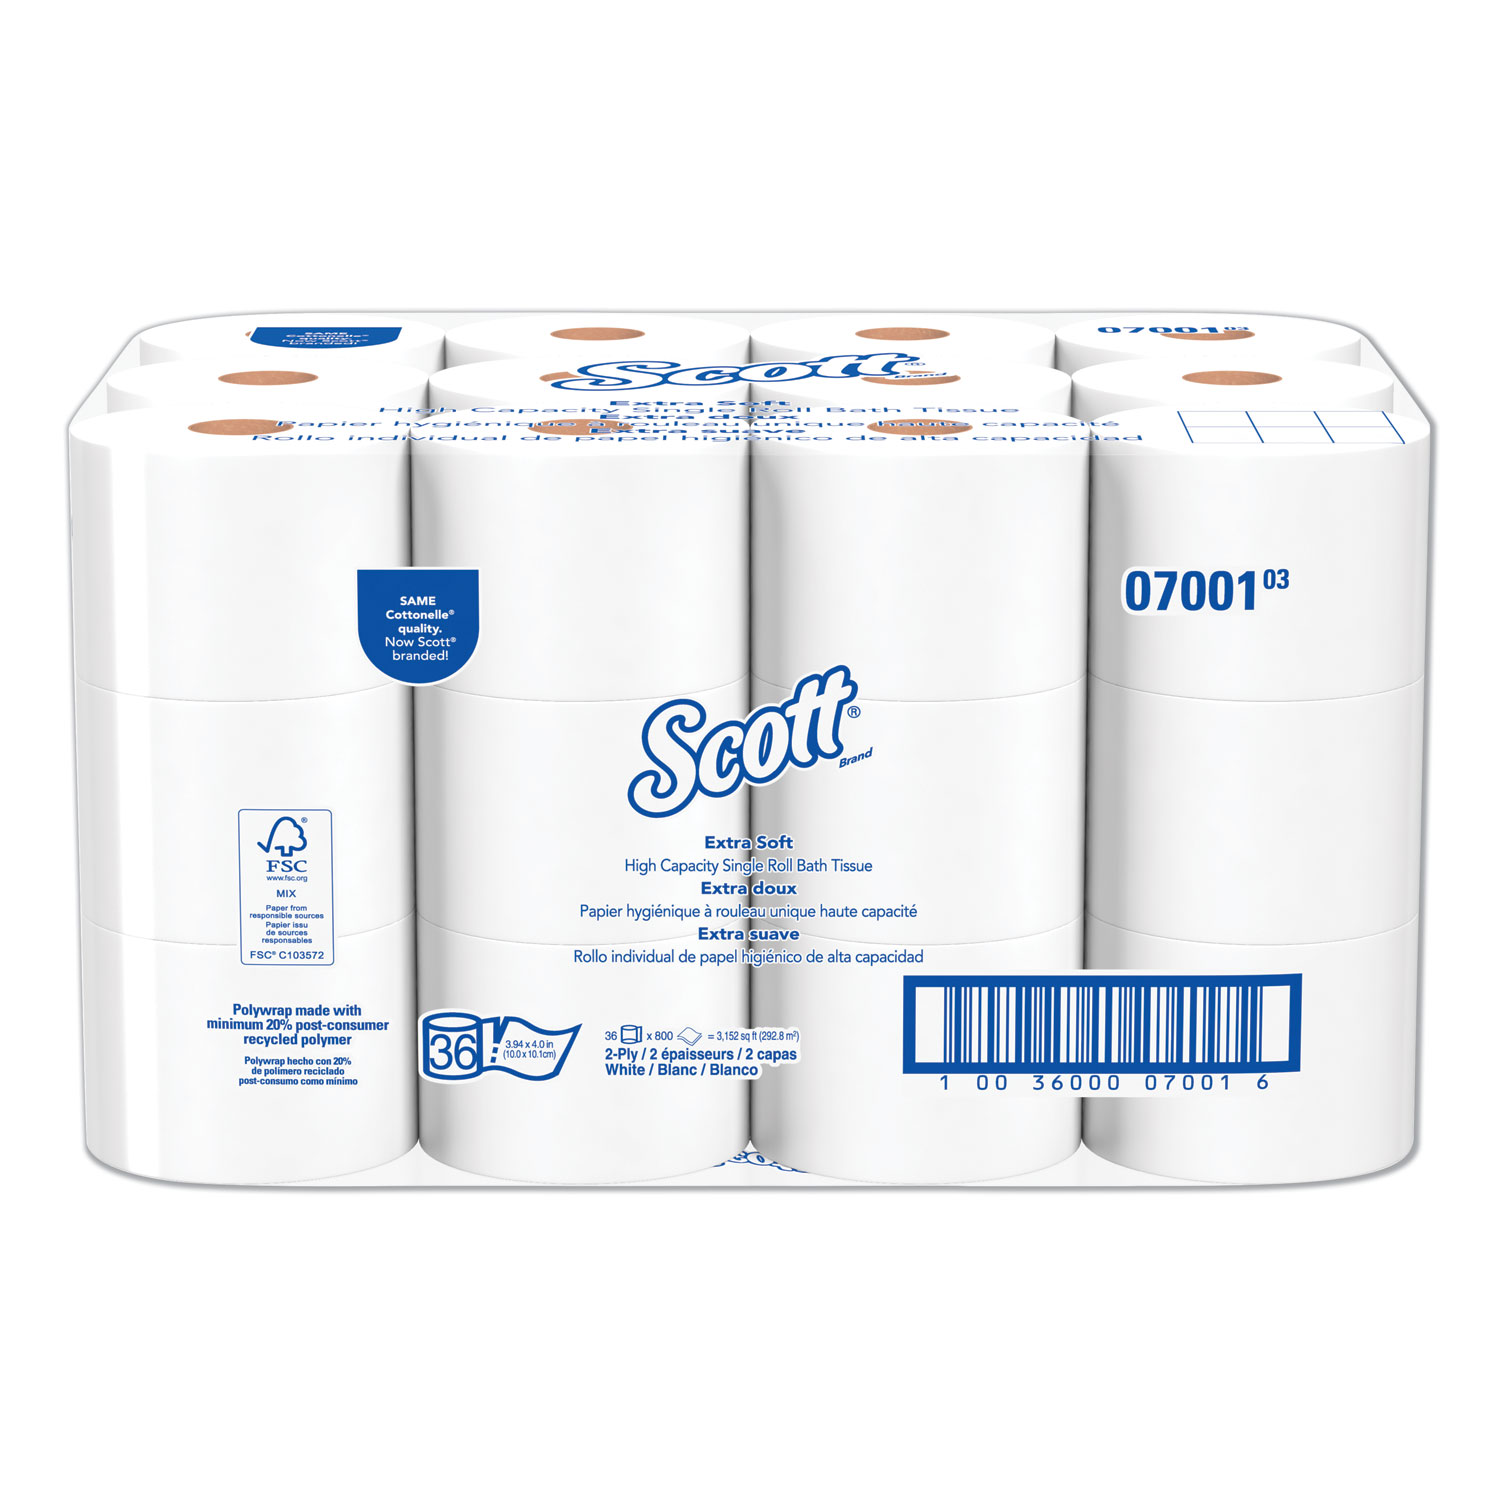  Scott 07001 Essential Extra Soft Coreless Standard Roll Bath Tissue, Septic Safe, 2-Ply, White, 800 Sheets/Roll, 36 Rolls/Carton (KCC07001) 